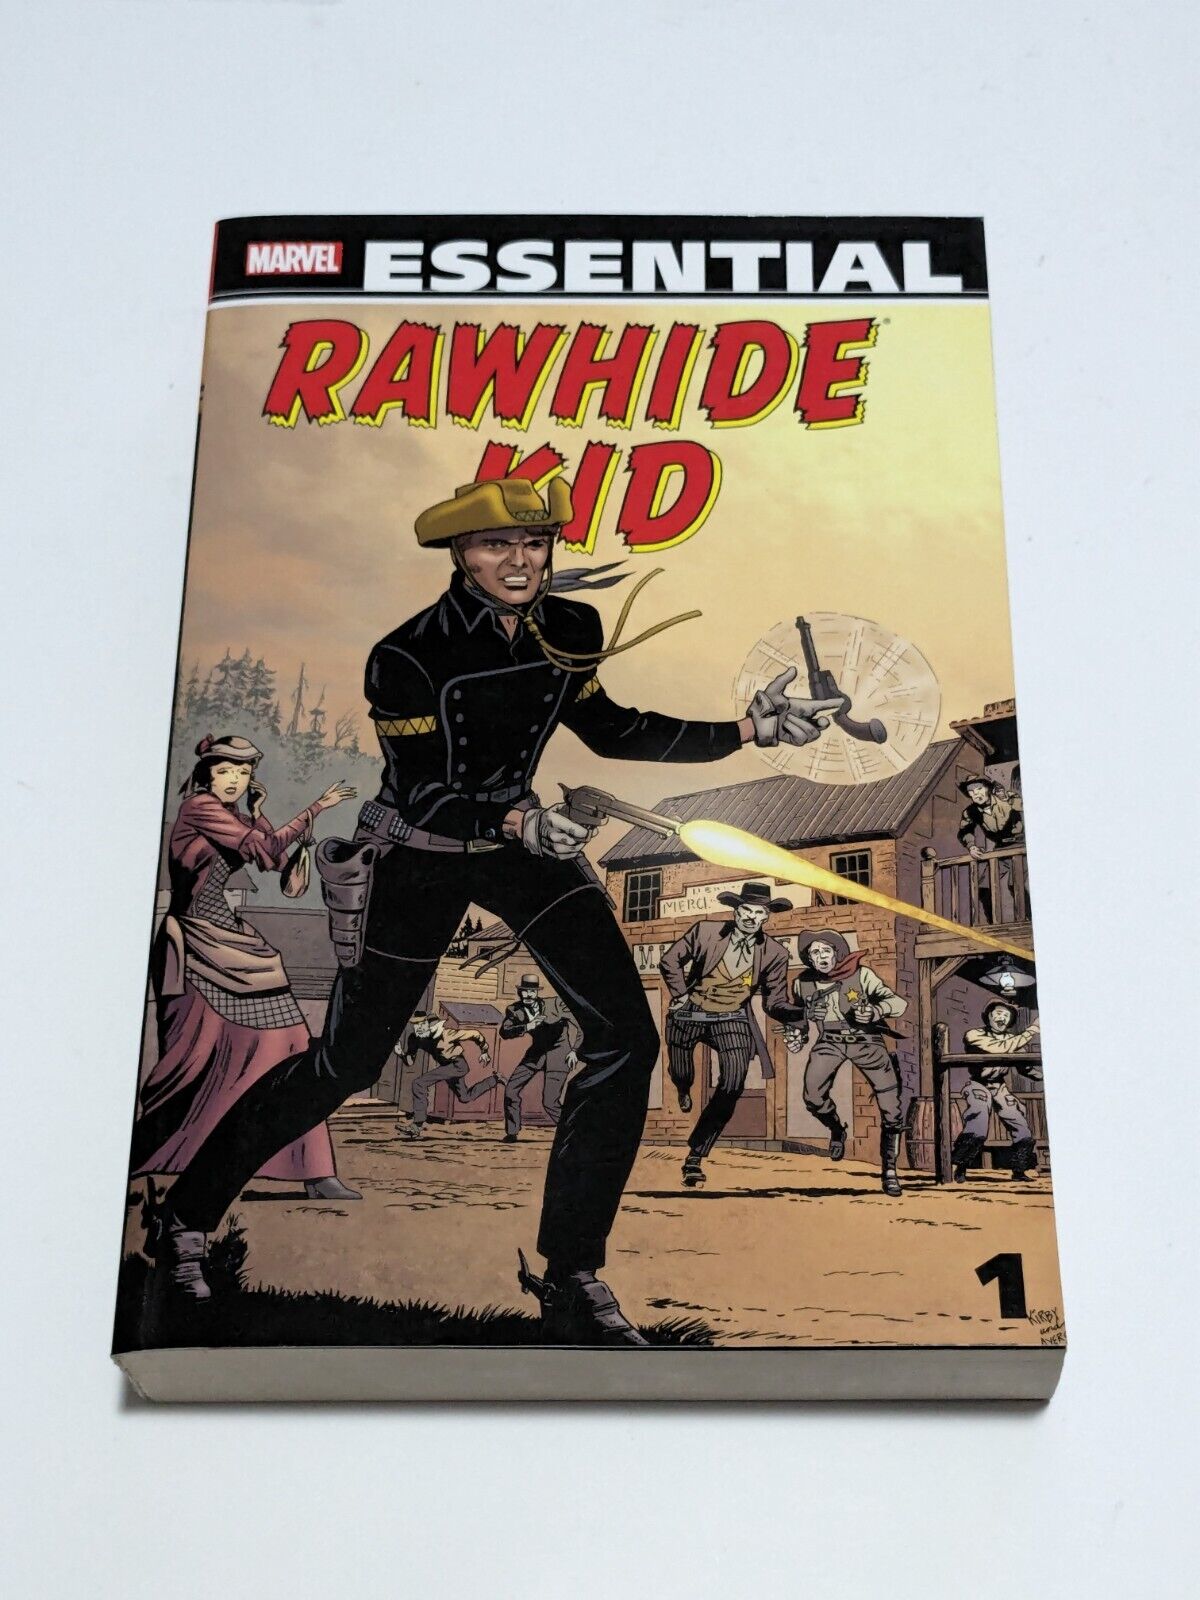 Marvel Essential Rawhide Kid Volume 1 New Trade Paperback Book